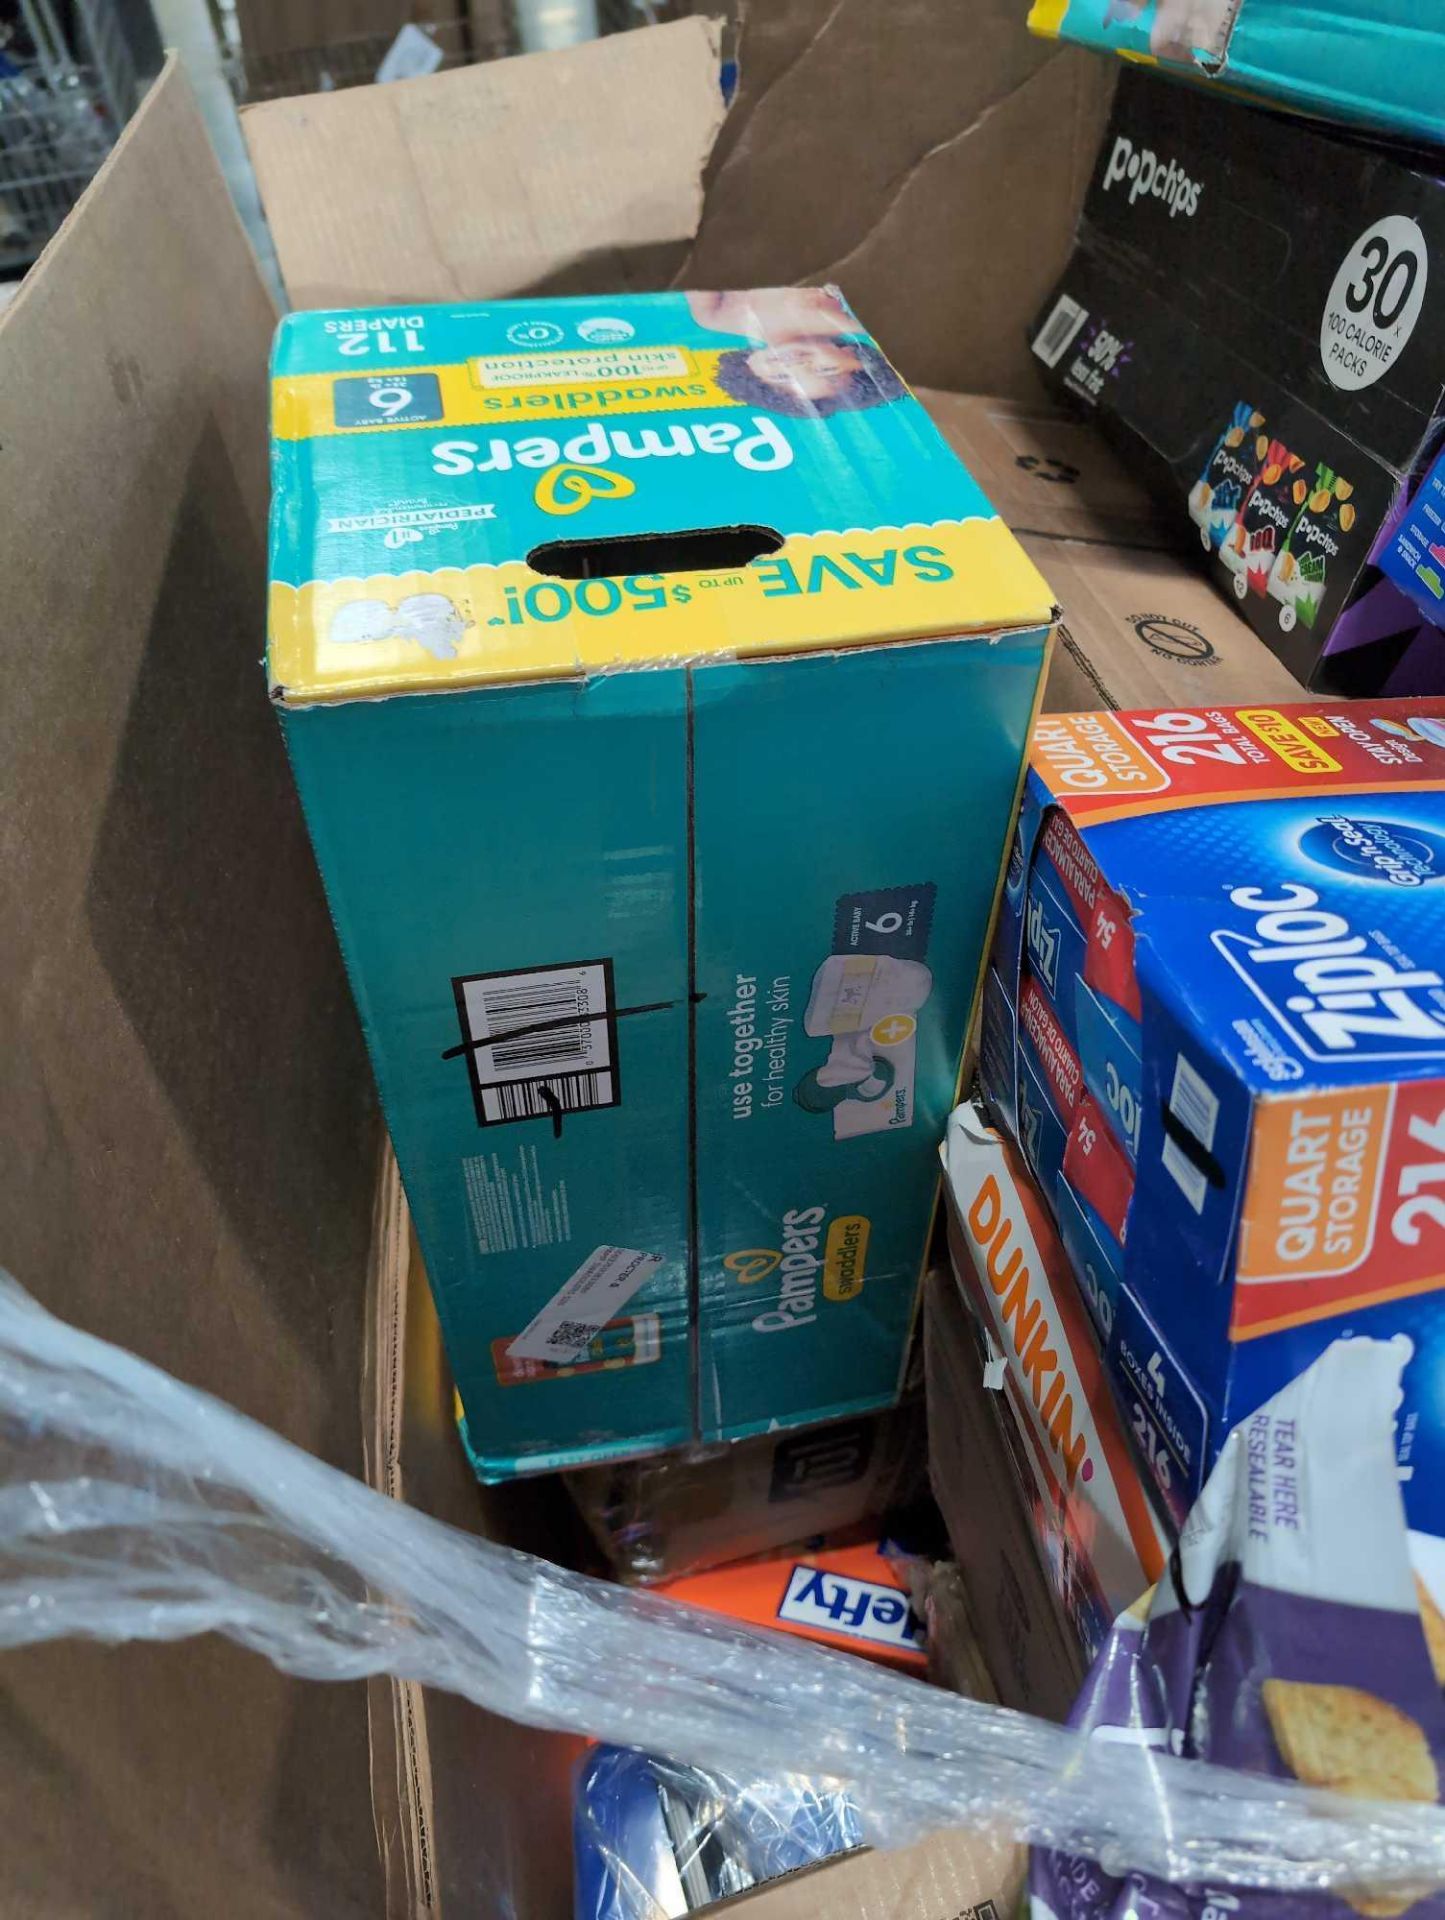 Big box store in a box: Nutrigrain, Soft hands, ziplic, popchips, dishwasher detergent, croutons, Ke - Image 9 of 14